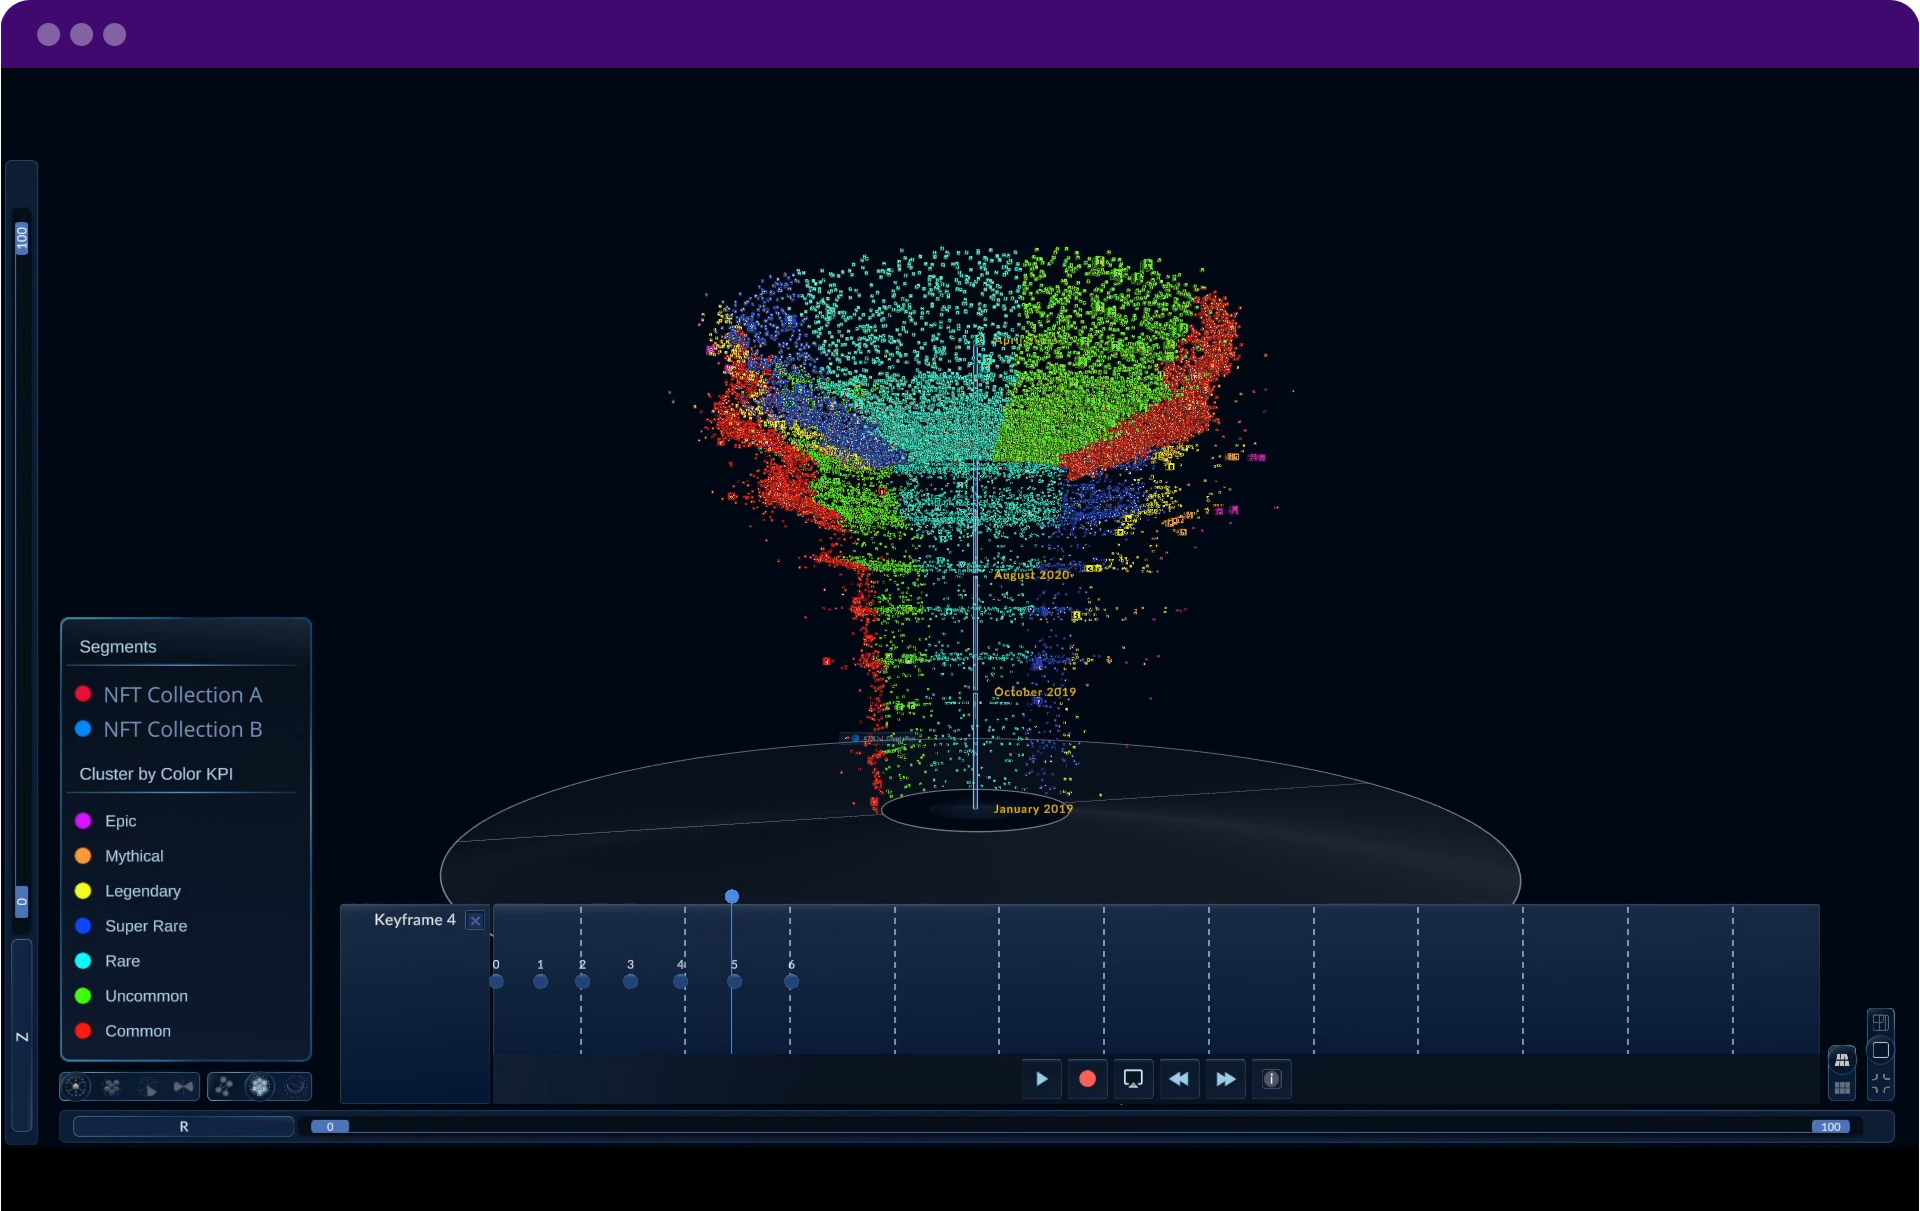 Screenshot from Cinderella 3D Data Visualization software